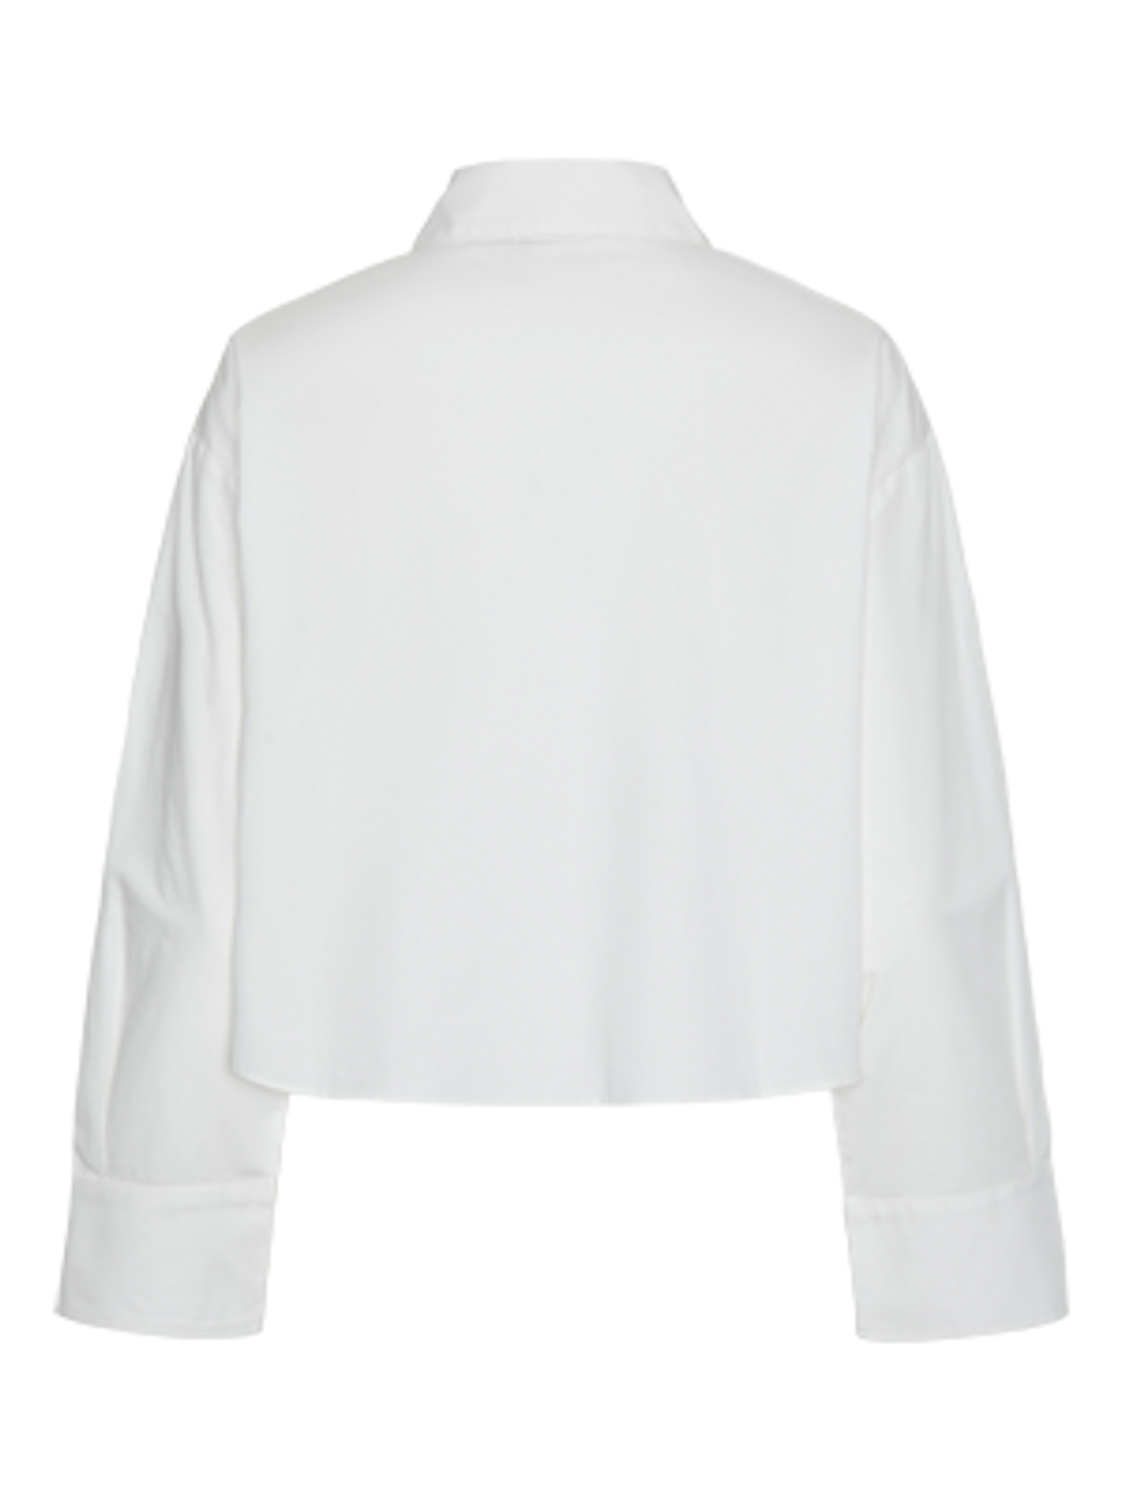 YASCRYSTAL Shirts - Star White